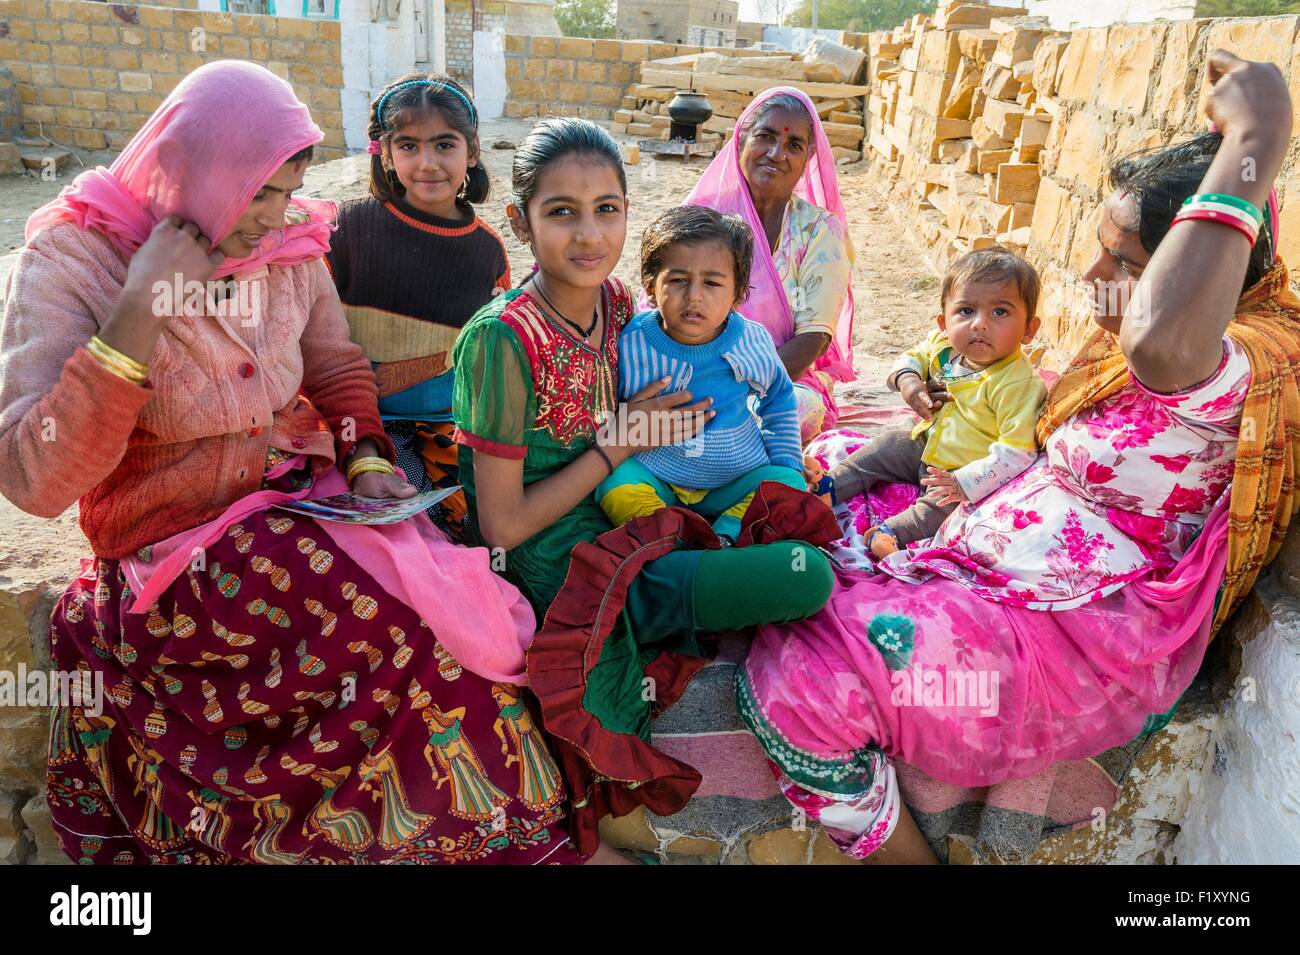 India, Rajasthan state, Jaisalmer, village life Stock Photo